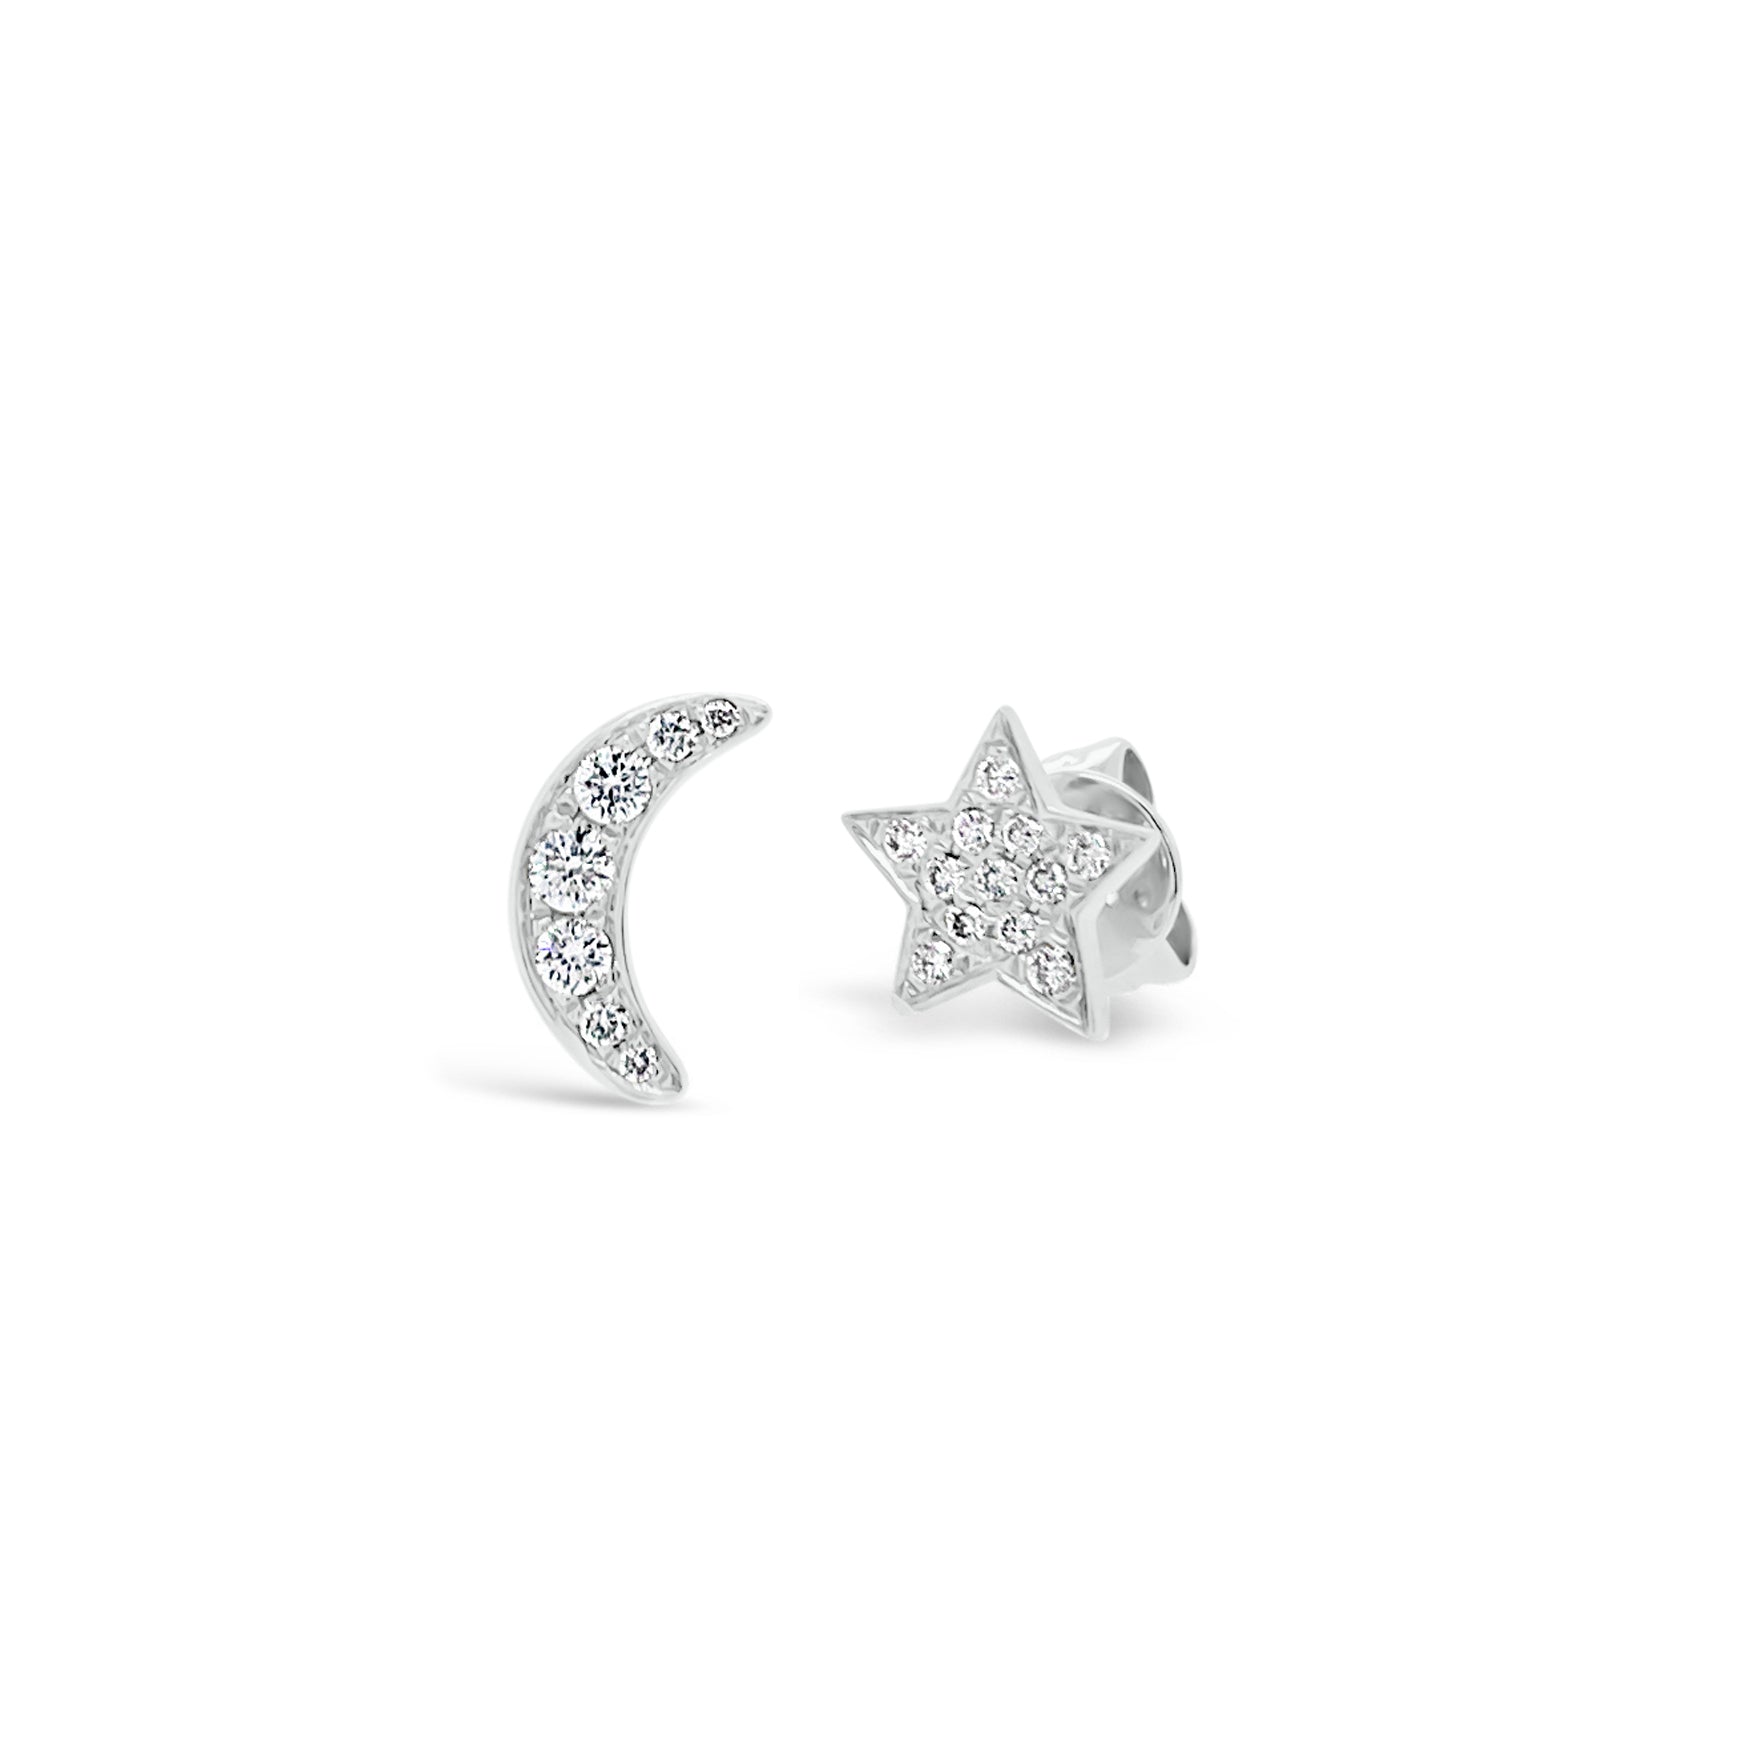 Diamond Moon & Star Stud Earrings - 14K white gold weighing 1.14 grams. - 19 round diamonds totaling 0.13 carats.